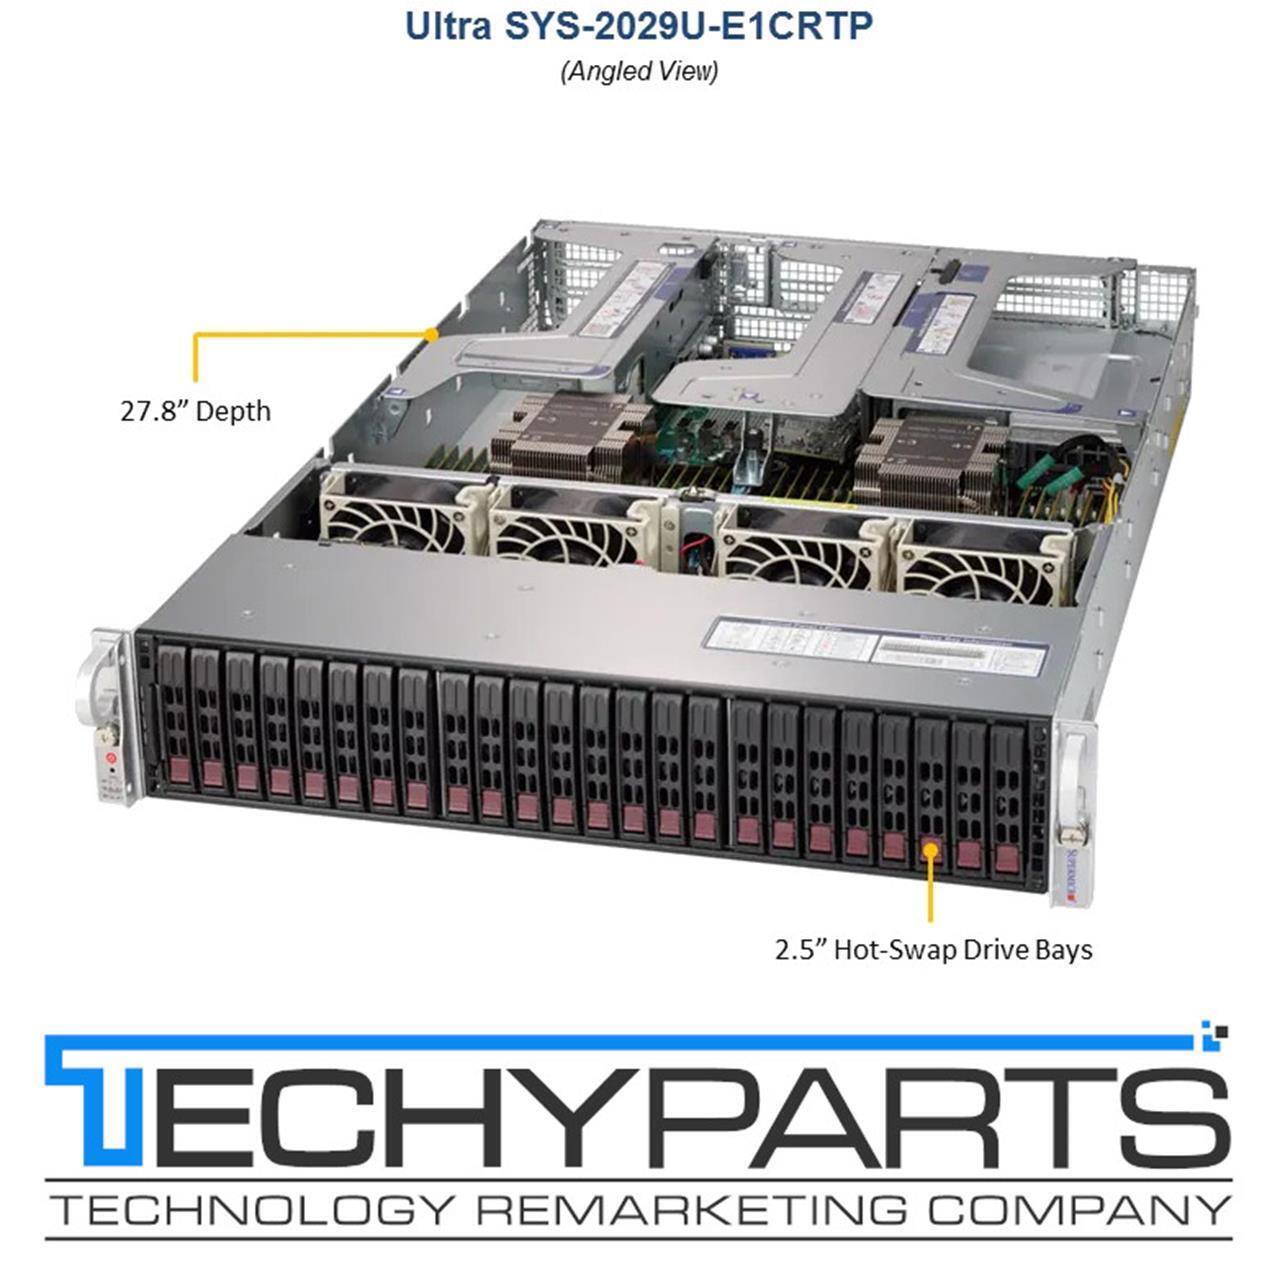 Supermicro SYS-2029U-E1CRTP X11DPU 2x Xeon Gold 6126 192GB RAM SAS3 2U Server